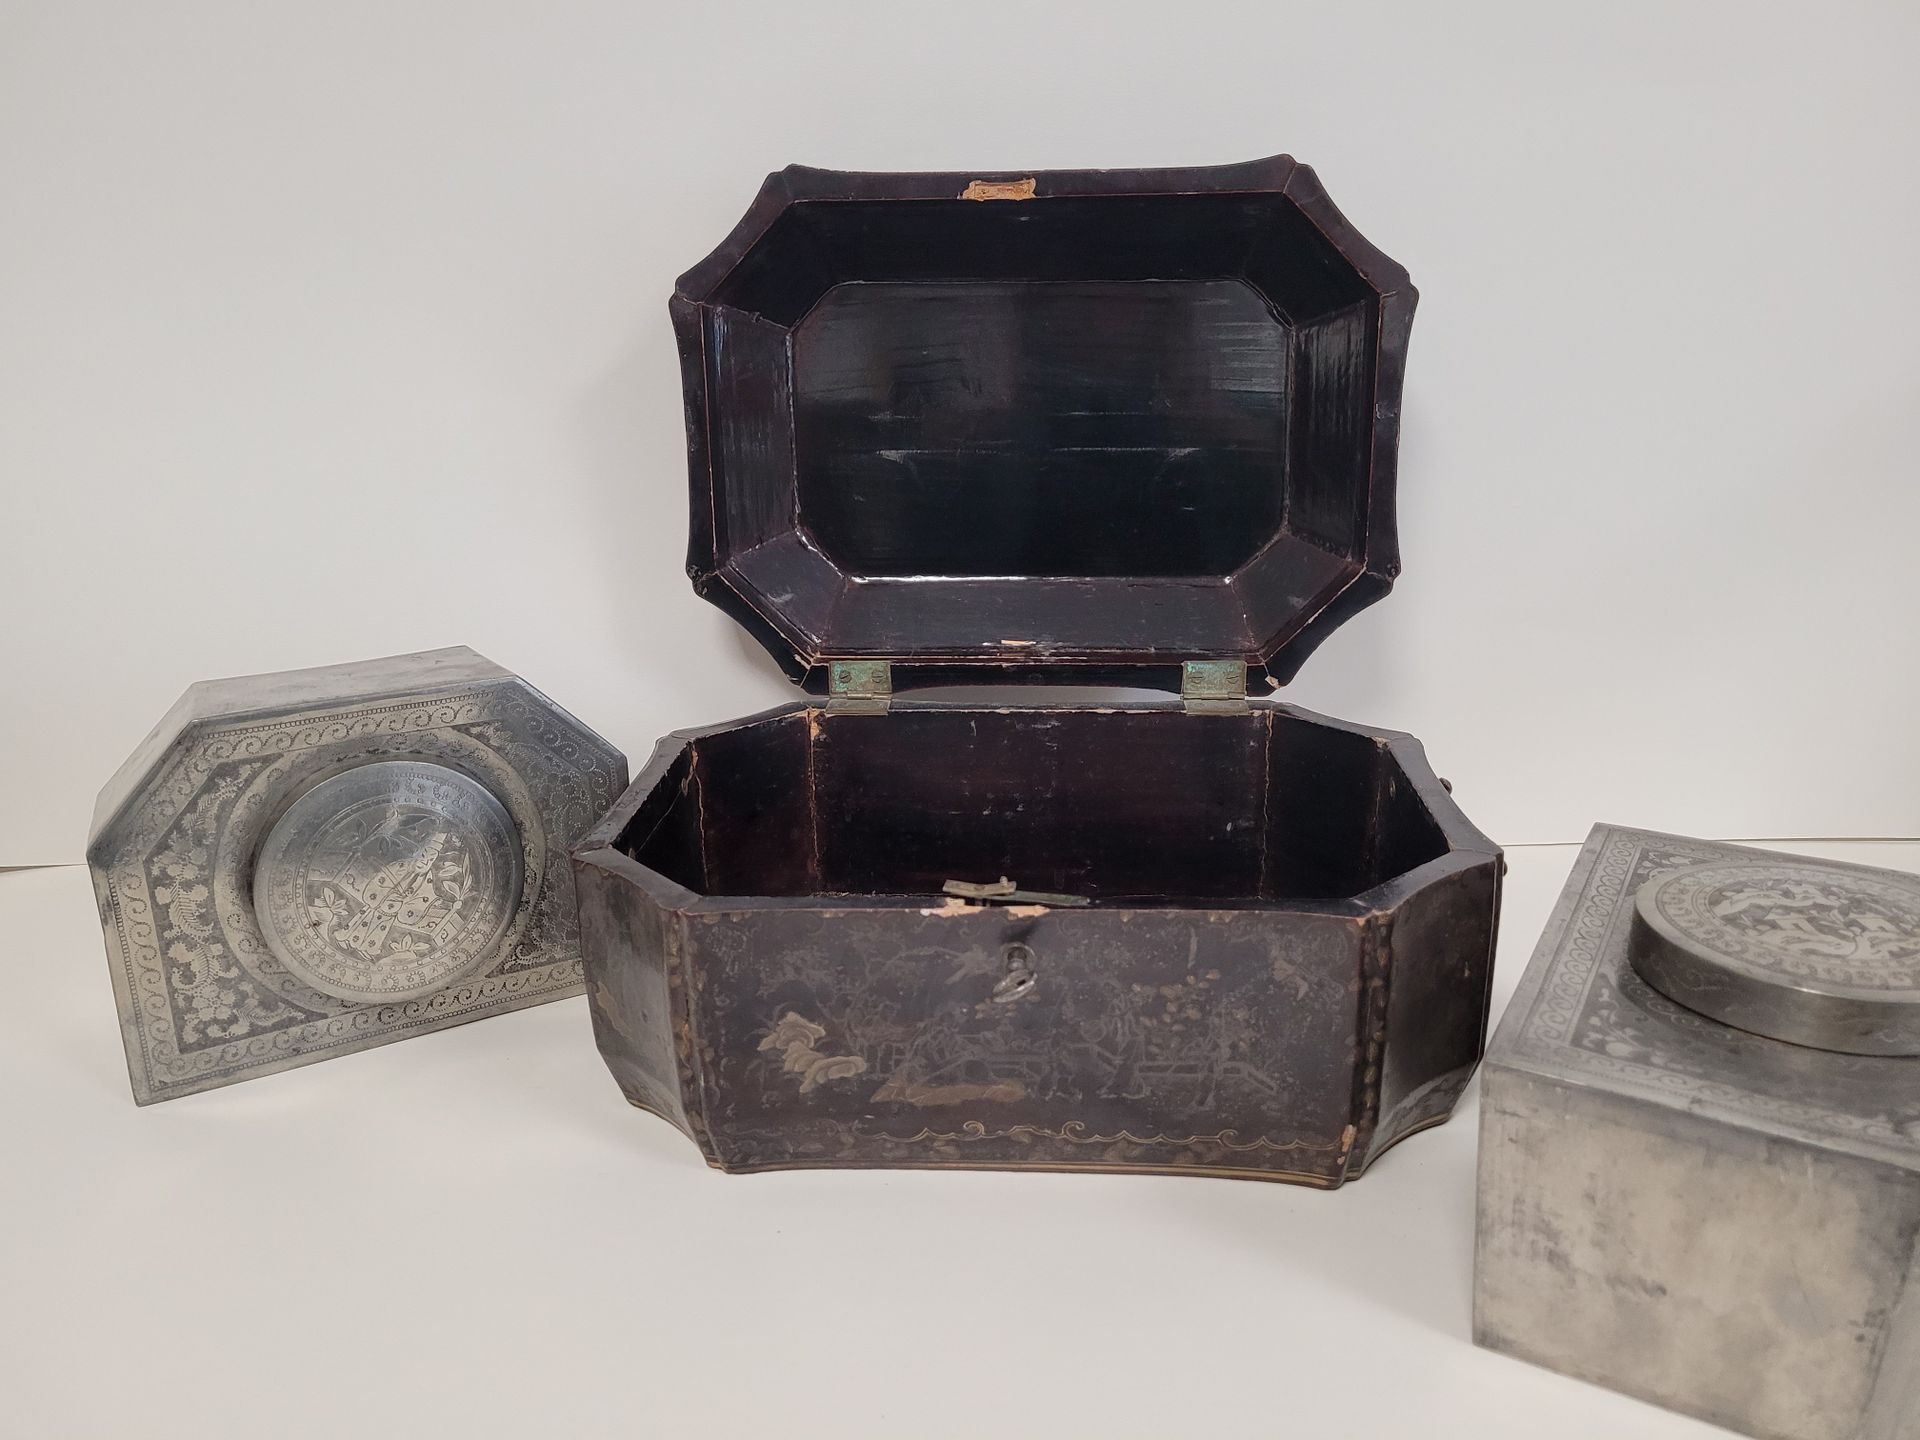 Null 茶叶盒，中国-广州为英国市场提供，19世纪。
长方形，木质切面，黑色背景上有金漆装饰的动画风景
。
包含两个刻有装饰的锡制茶壶和它们的塞子。
尺寸：3&hellip;